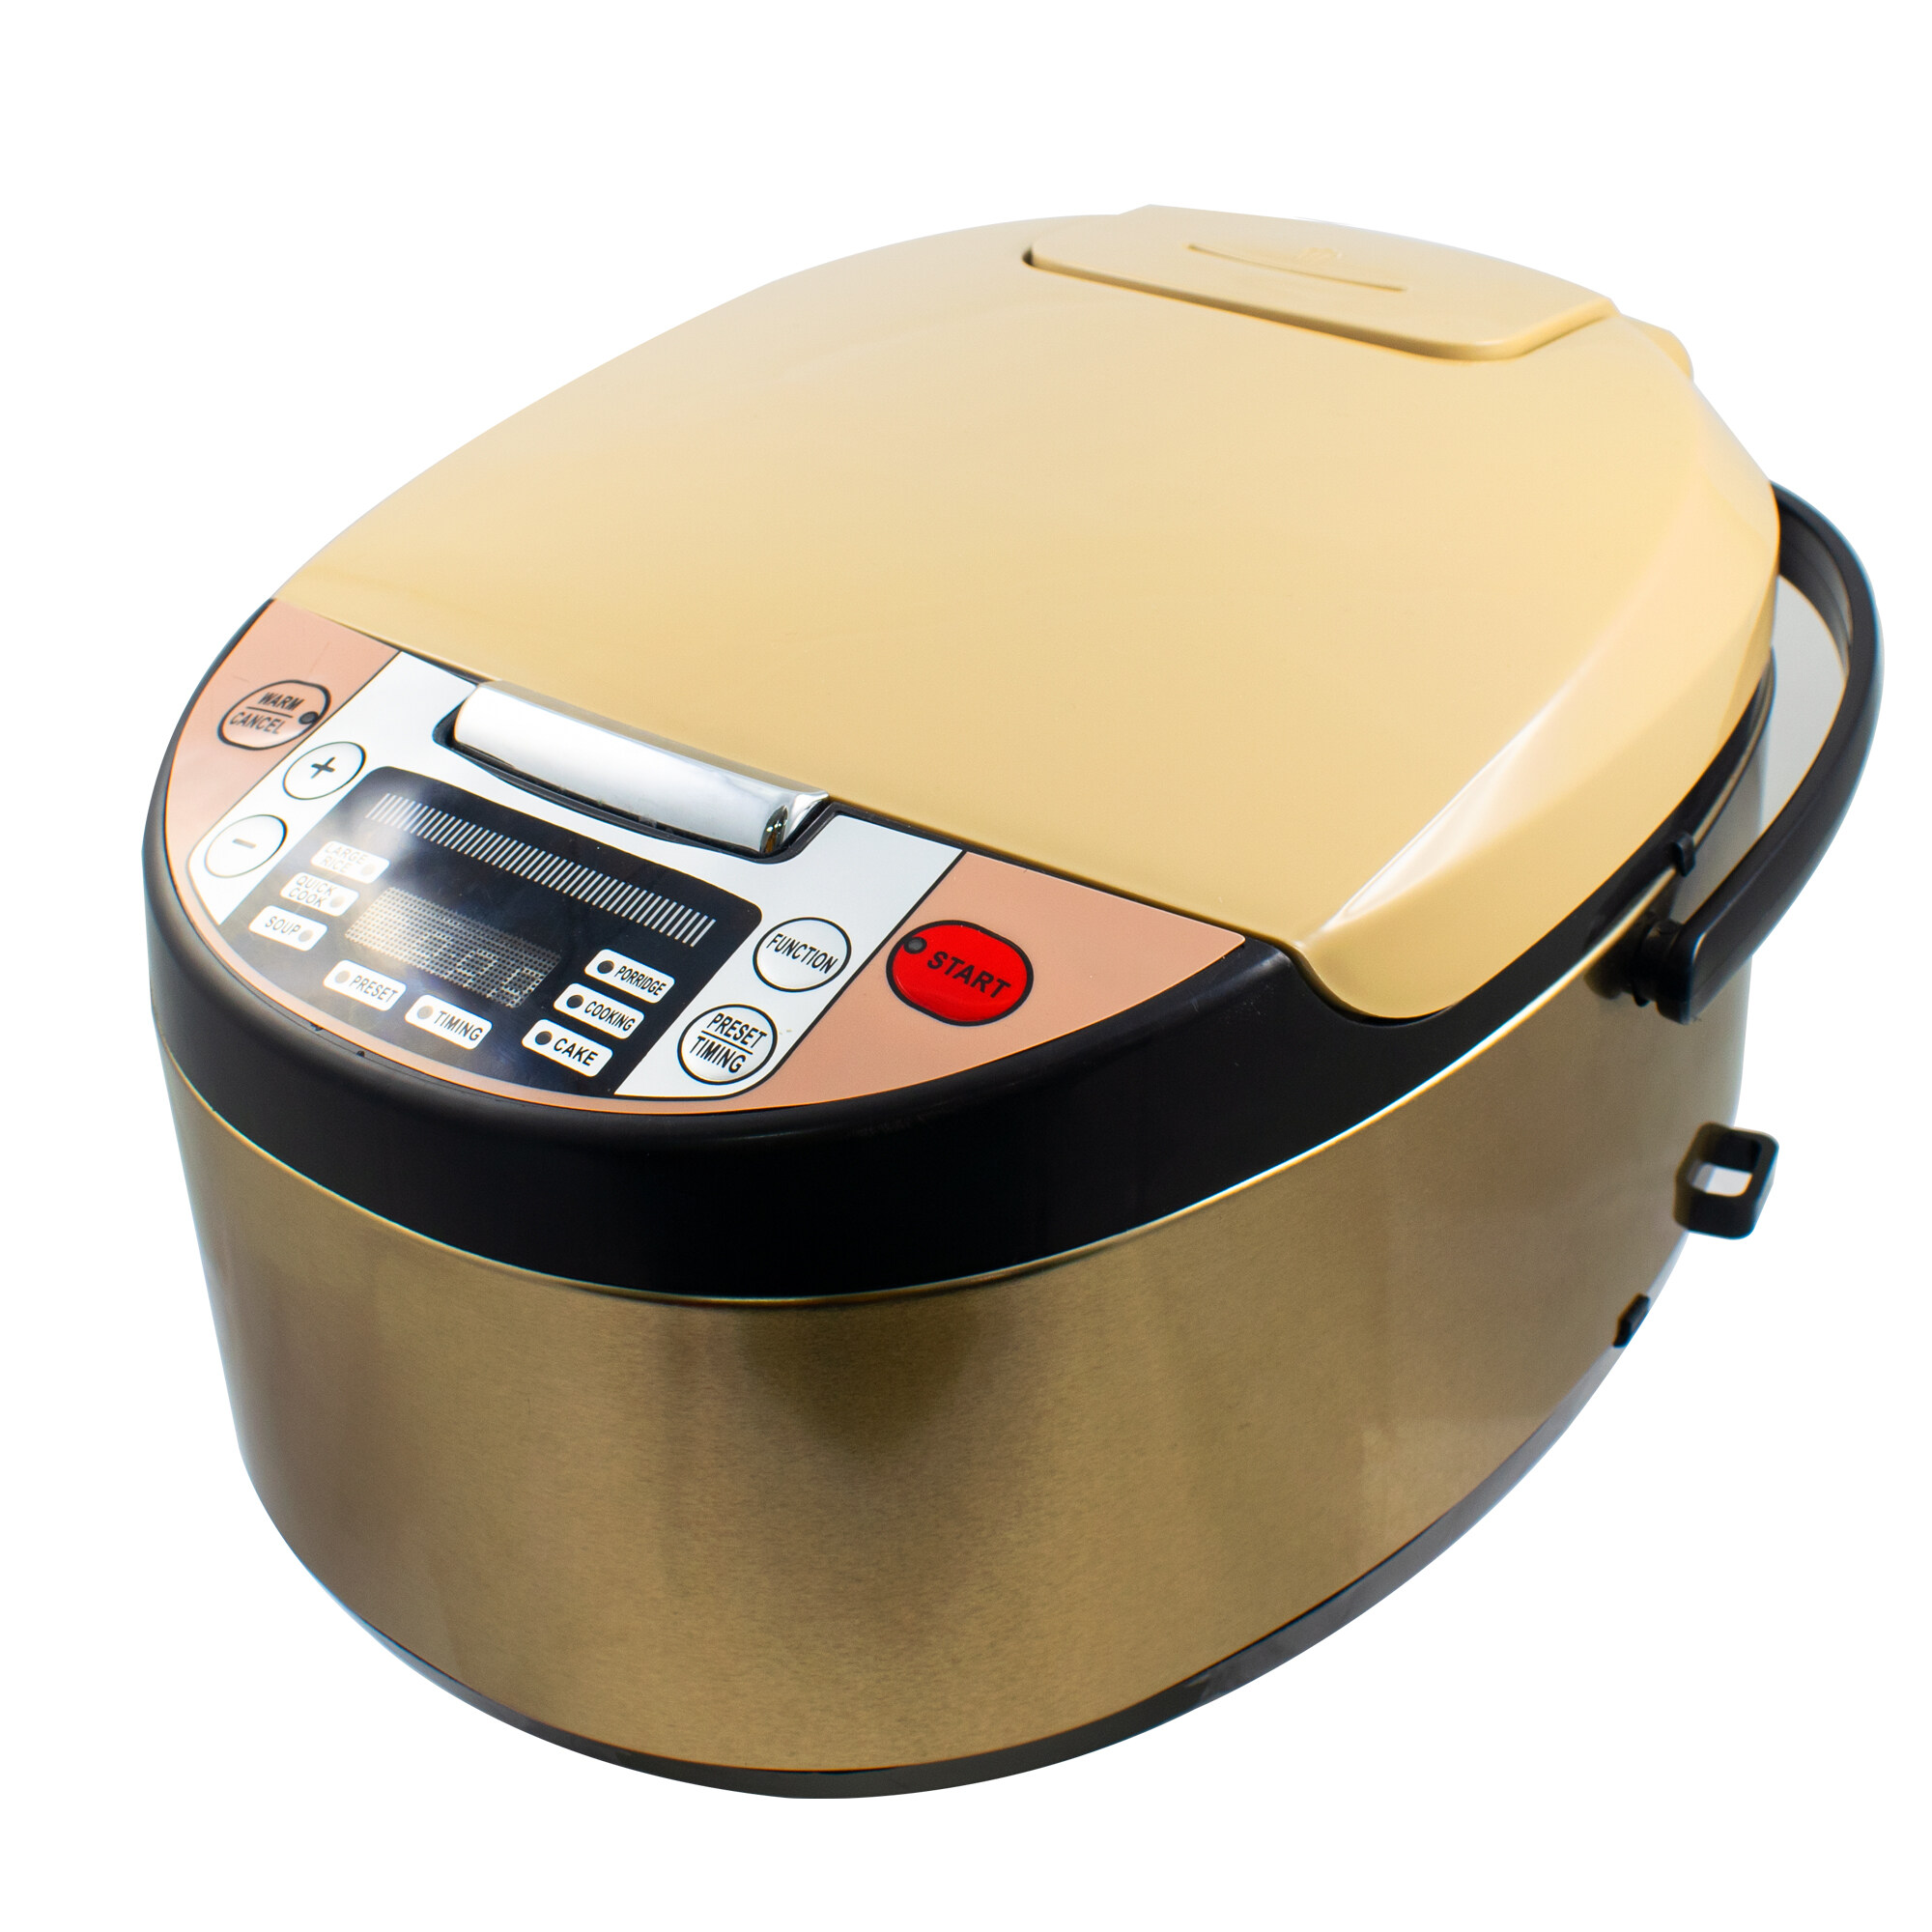 SMARTHOME Digital rice cooker หม้อหุงข้าวดิจิตอล รุ่น SM-RCD905 รับประกัน 3 ปี